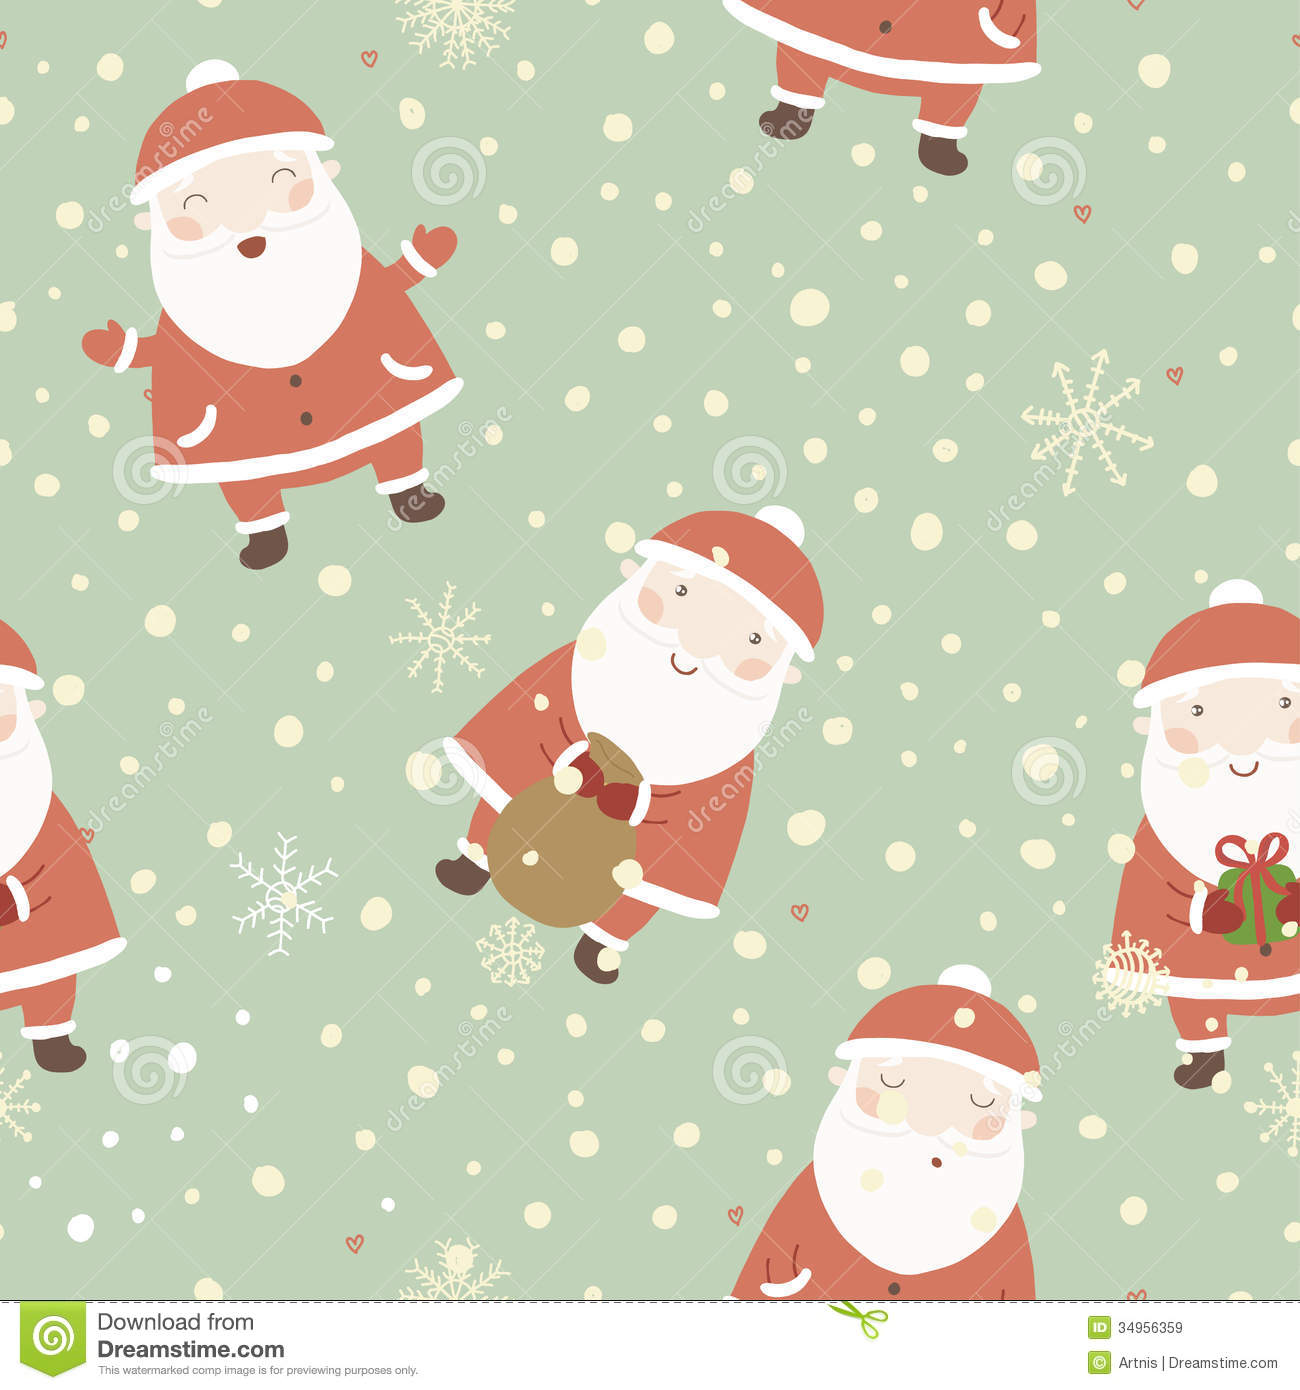 Cute Cartoon Christmas Wallpaper 10560 Hd Wallpapers